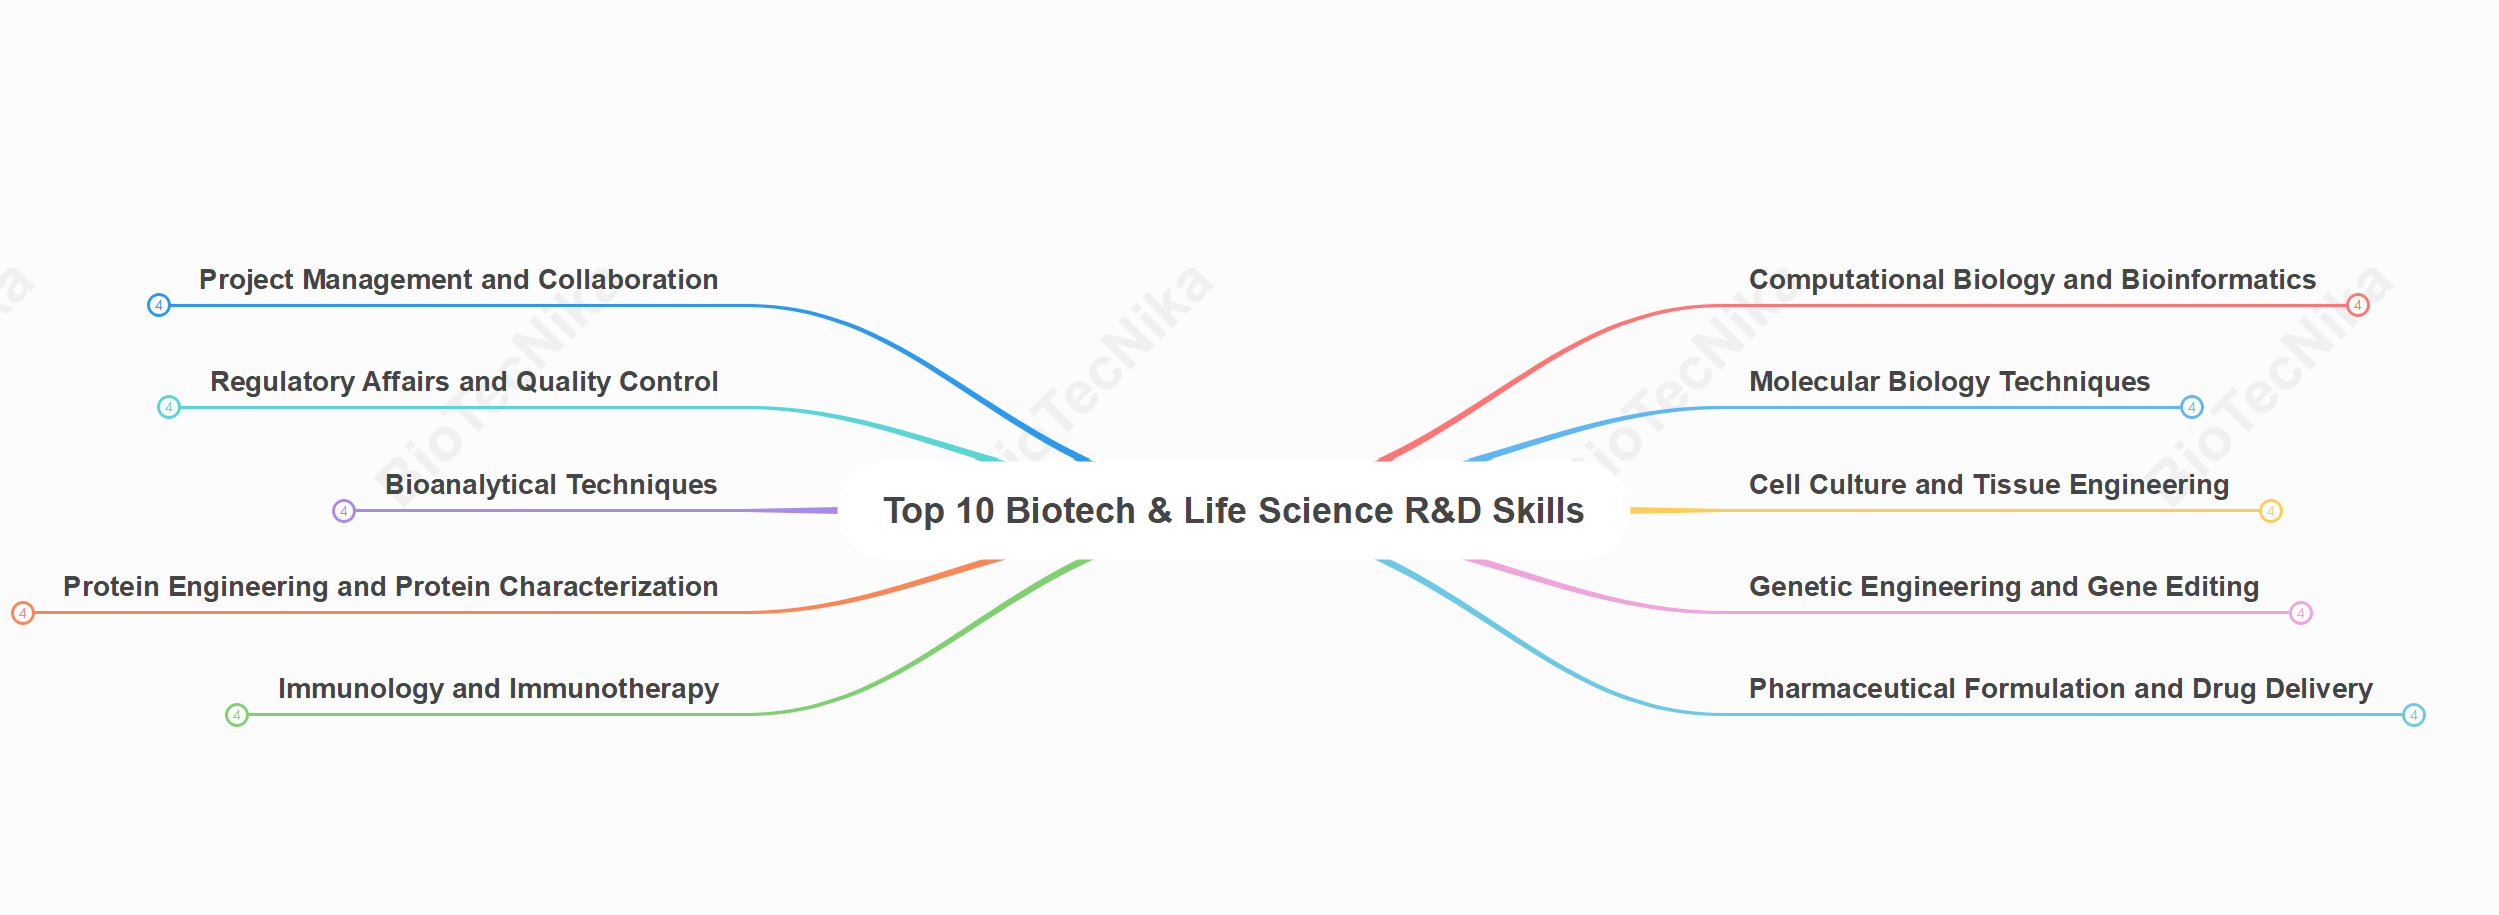 Top 25 Most In Demand Biotech Jobs